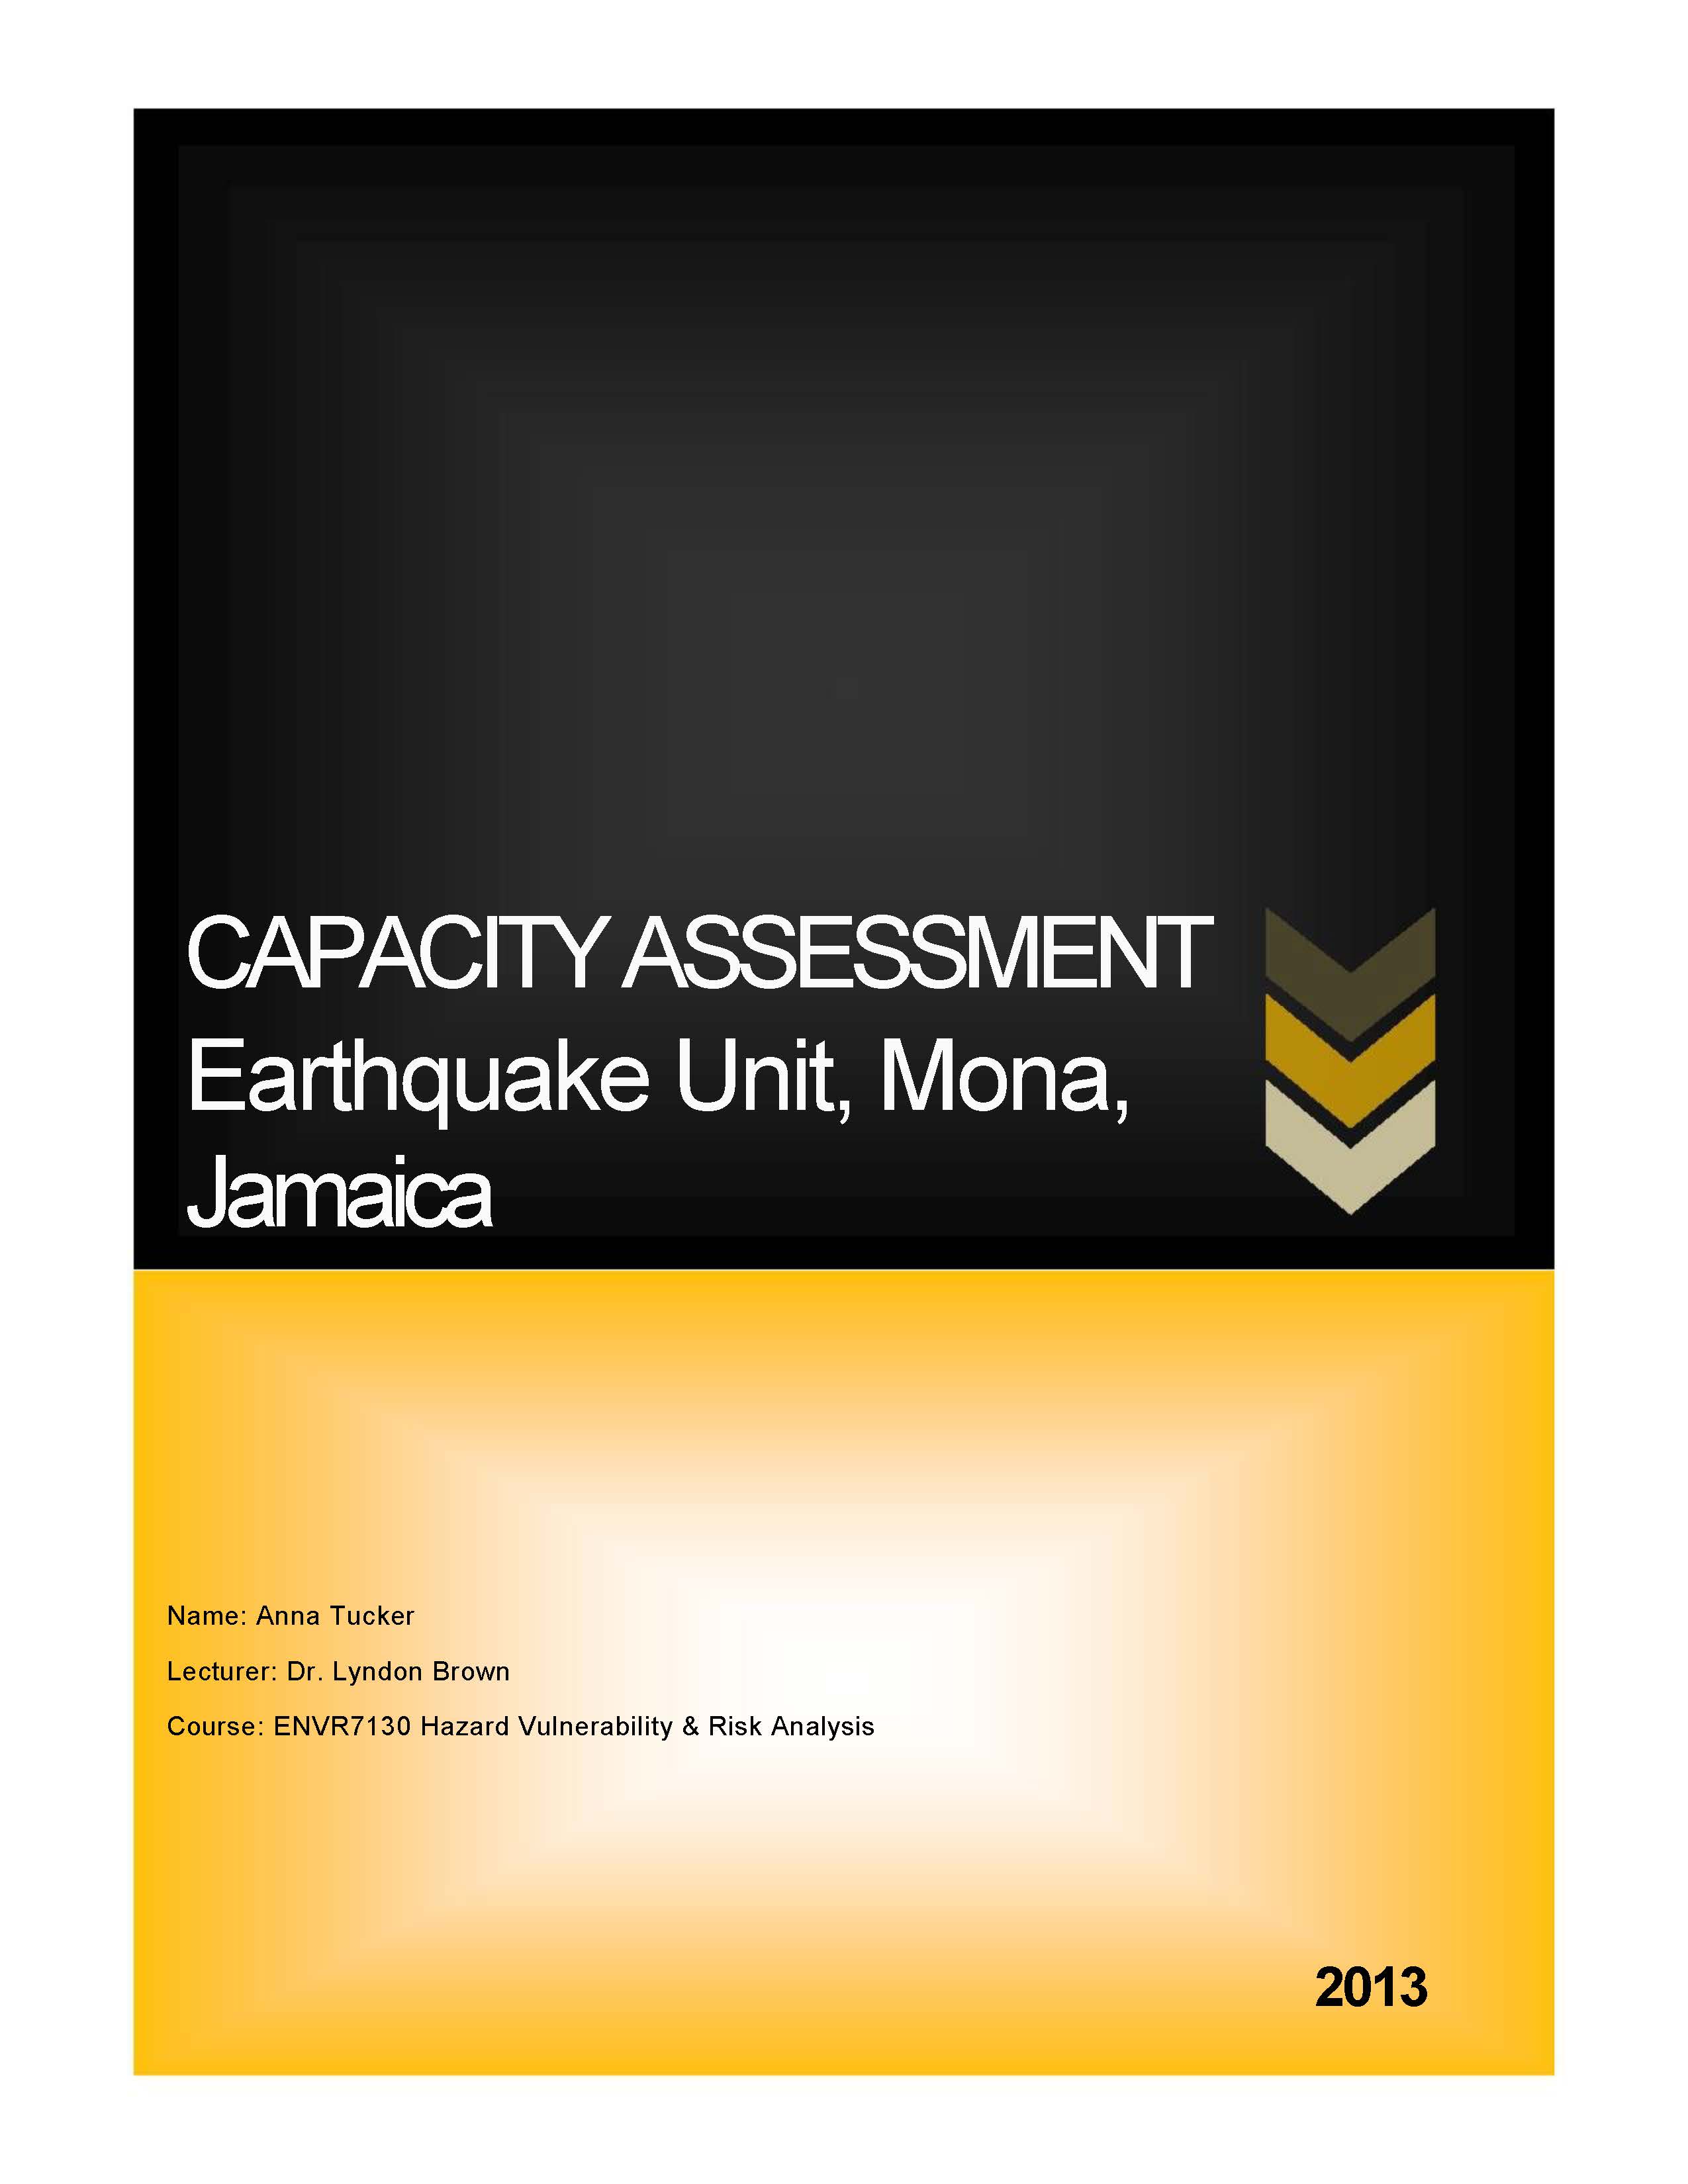 Capacity Assessment Earthquake Unit, Mona, Jamaica